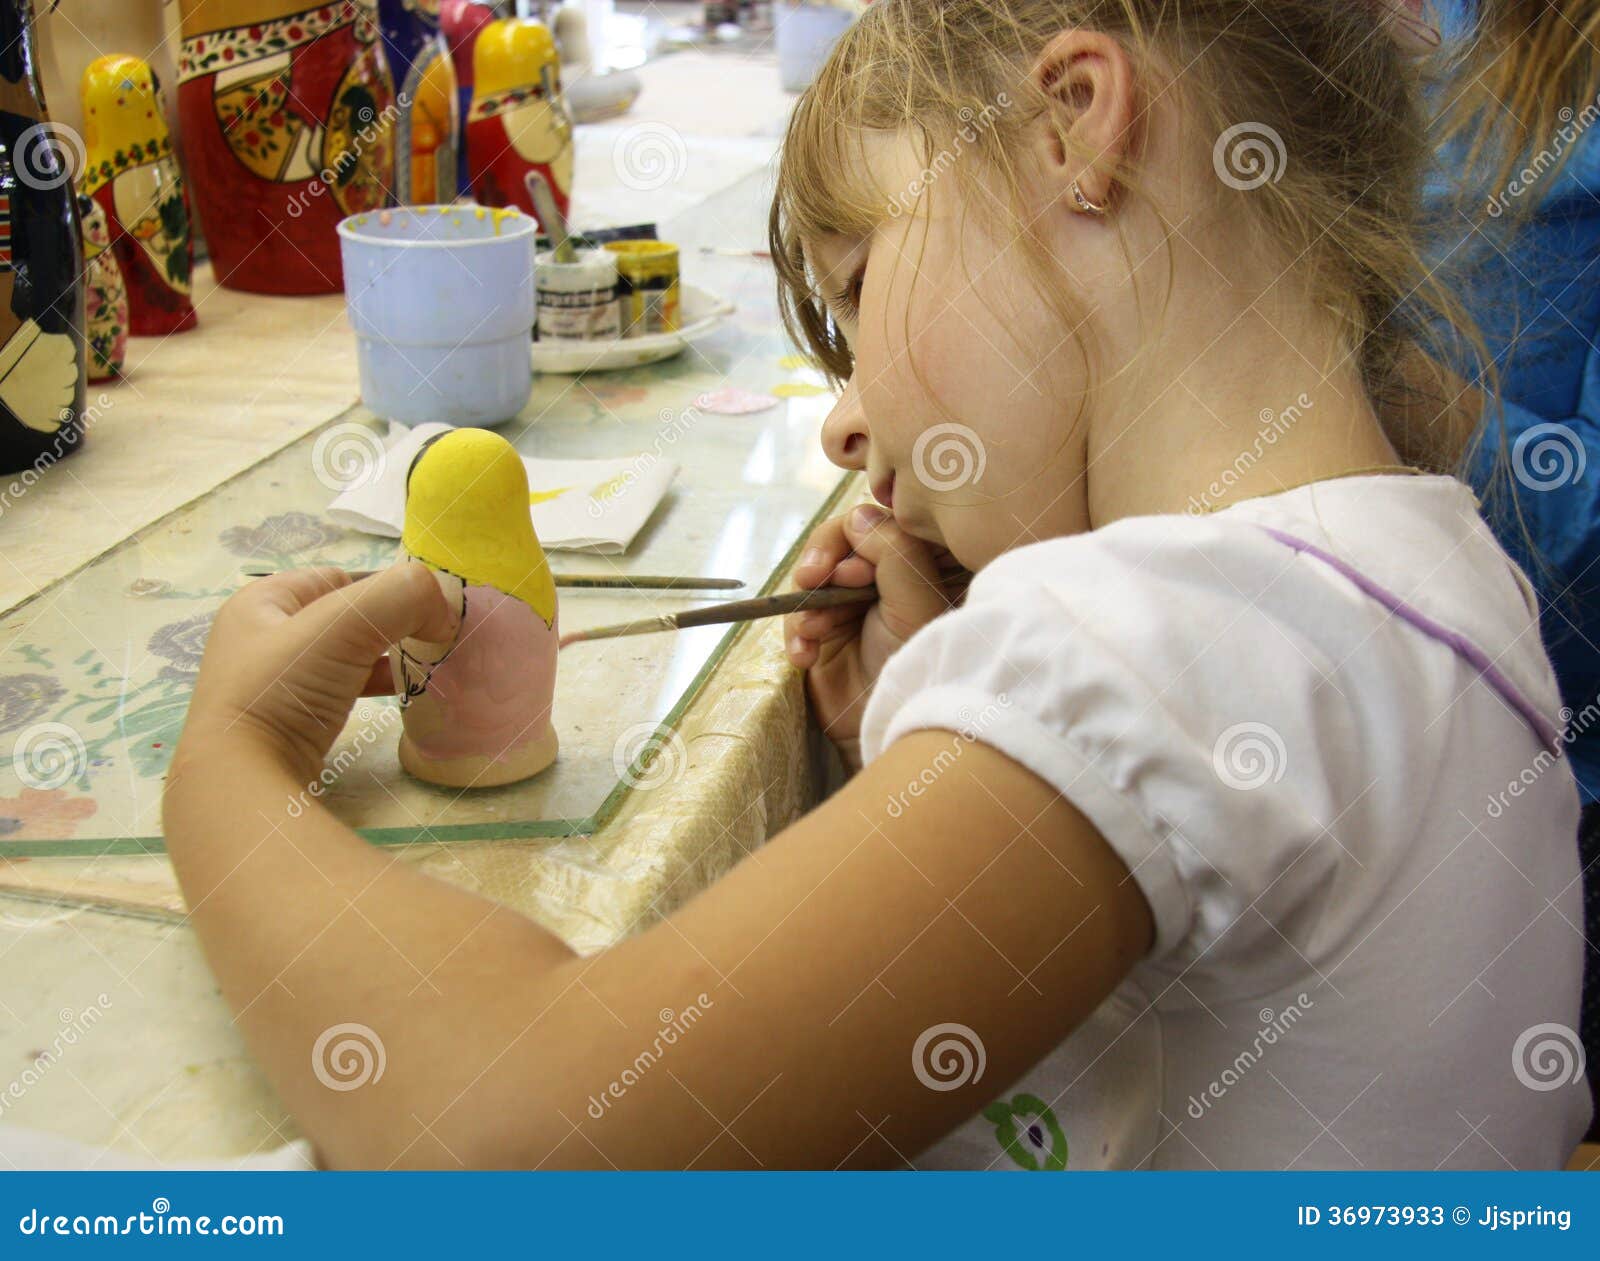 little girl painting a matrioshka russian doll